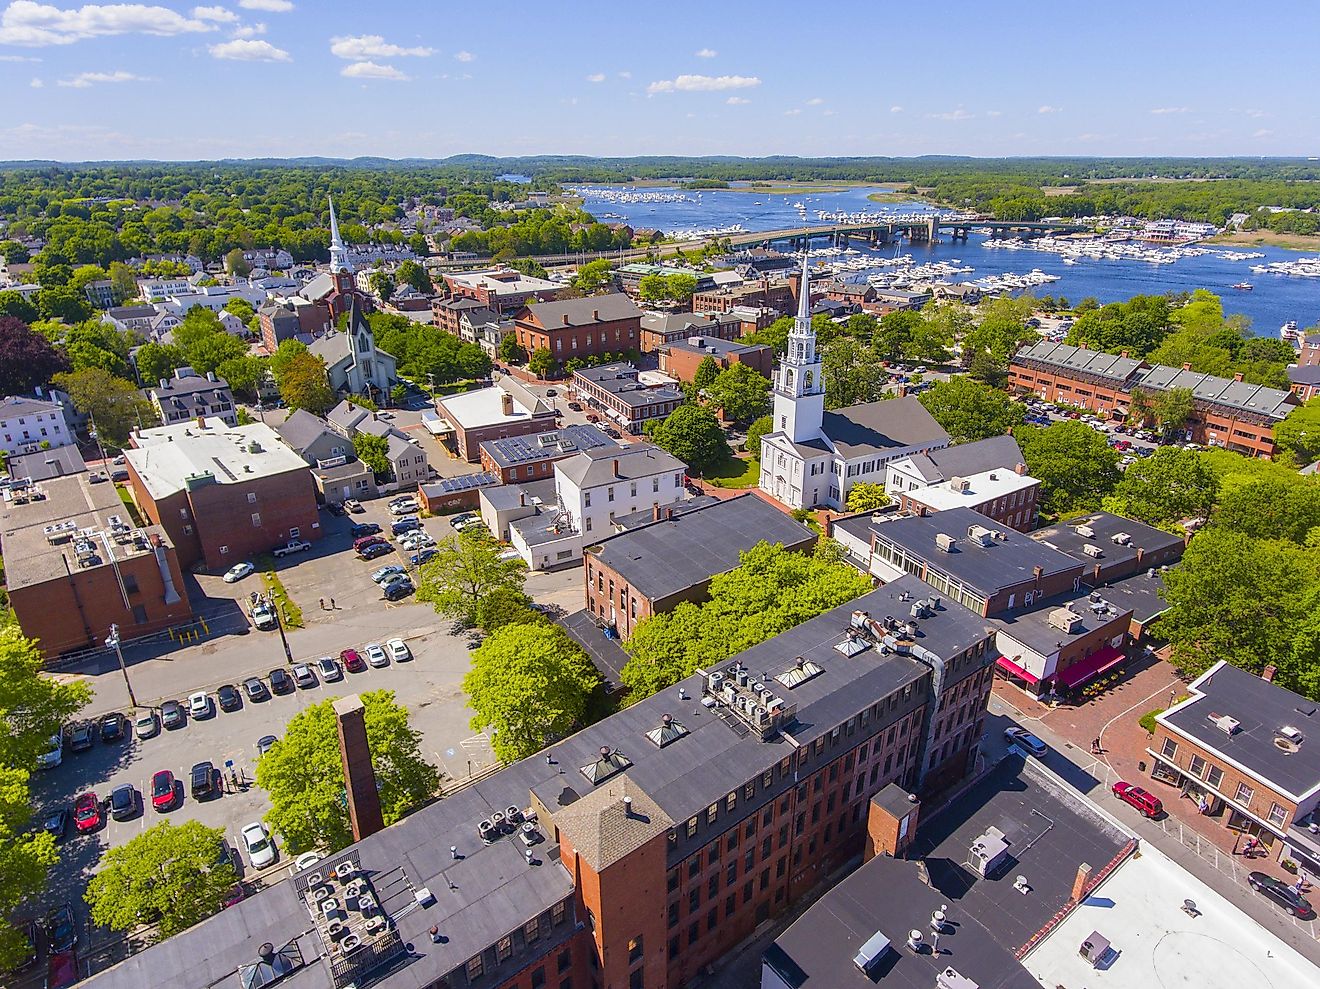 Historic downtown of Newburyport, Massachusetts.